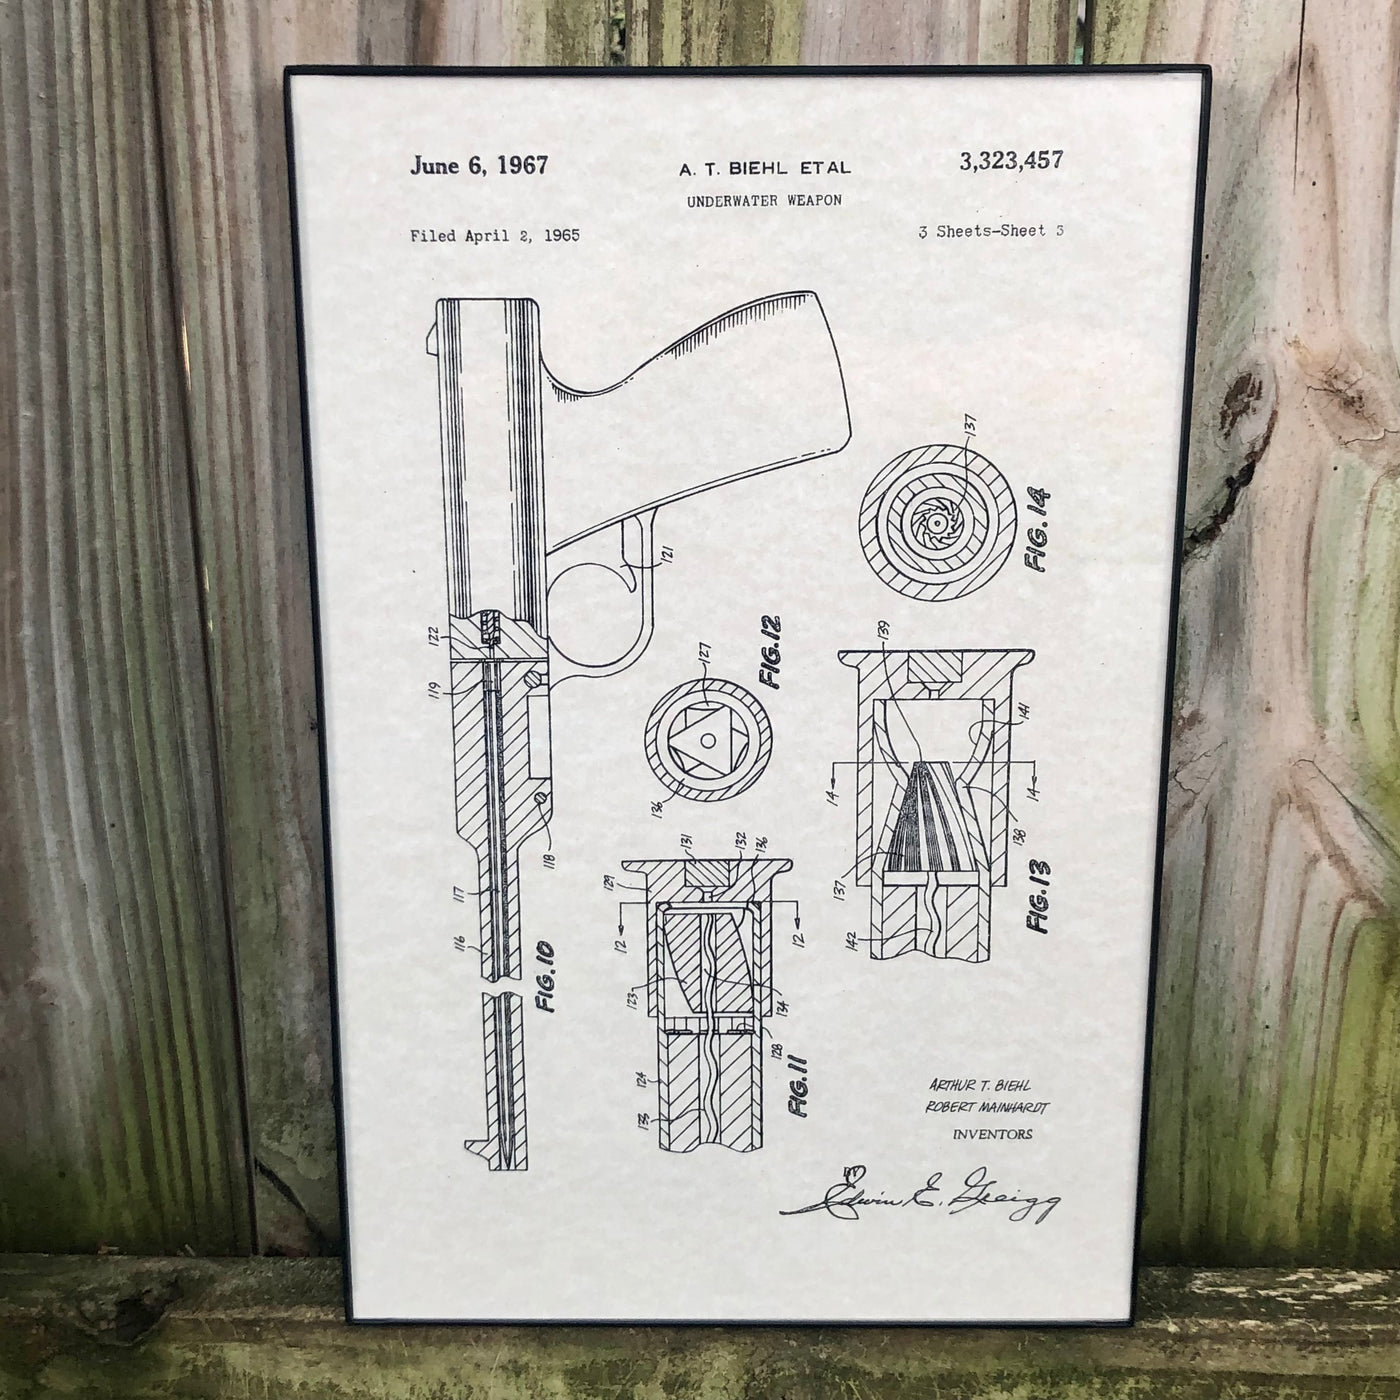 Underwater Pistol Patent Poster Set | Posters Prints & 